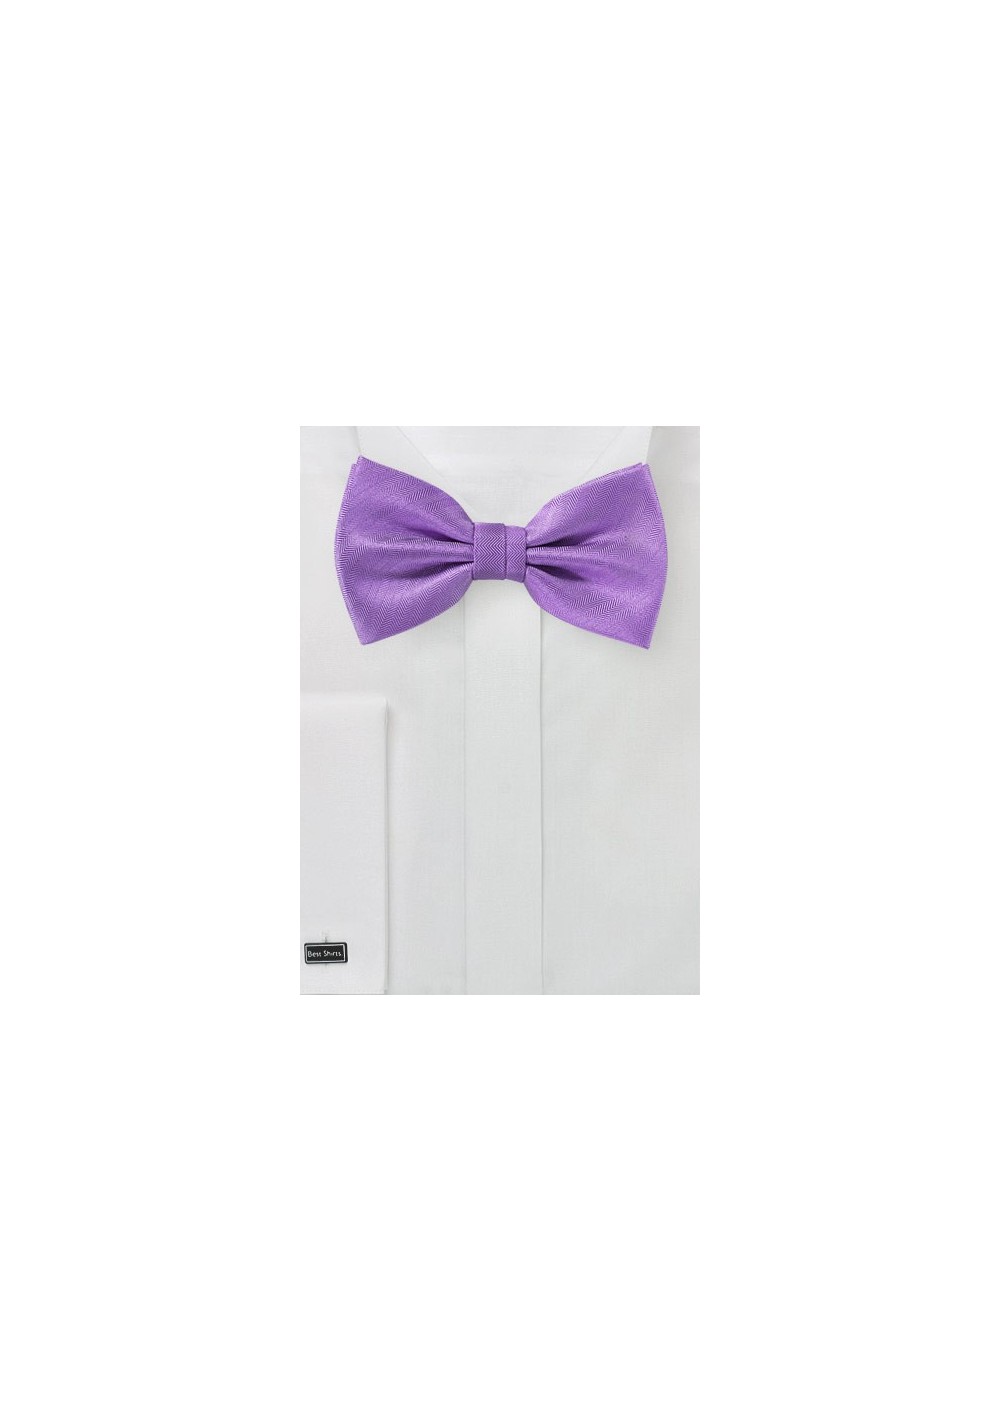 Textured Bow Tie in Violet